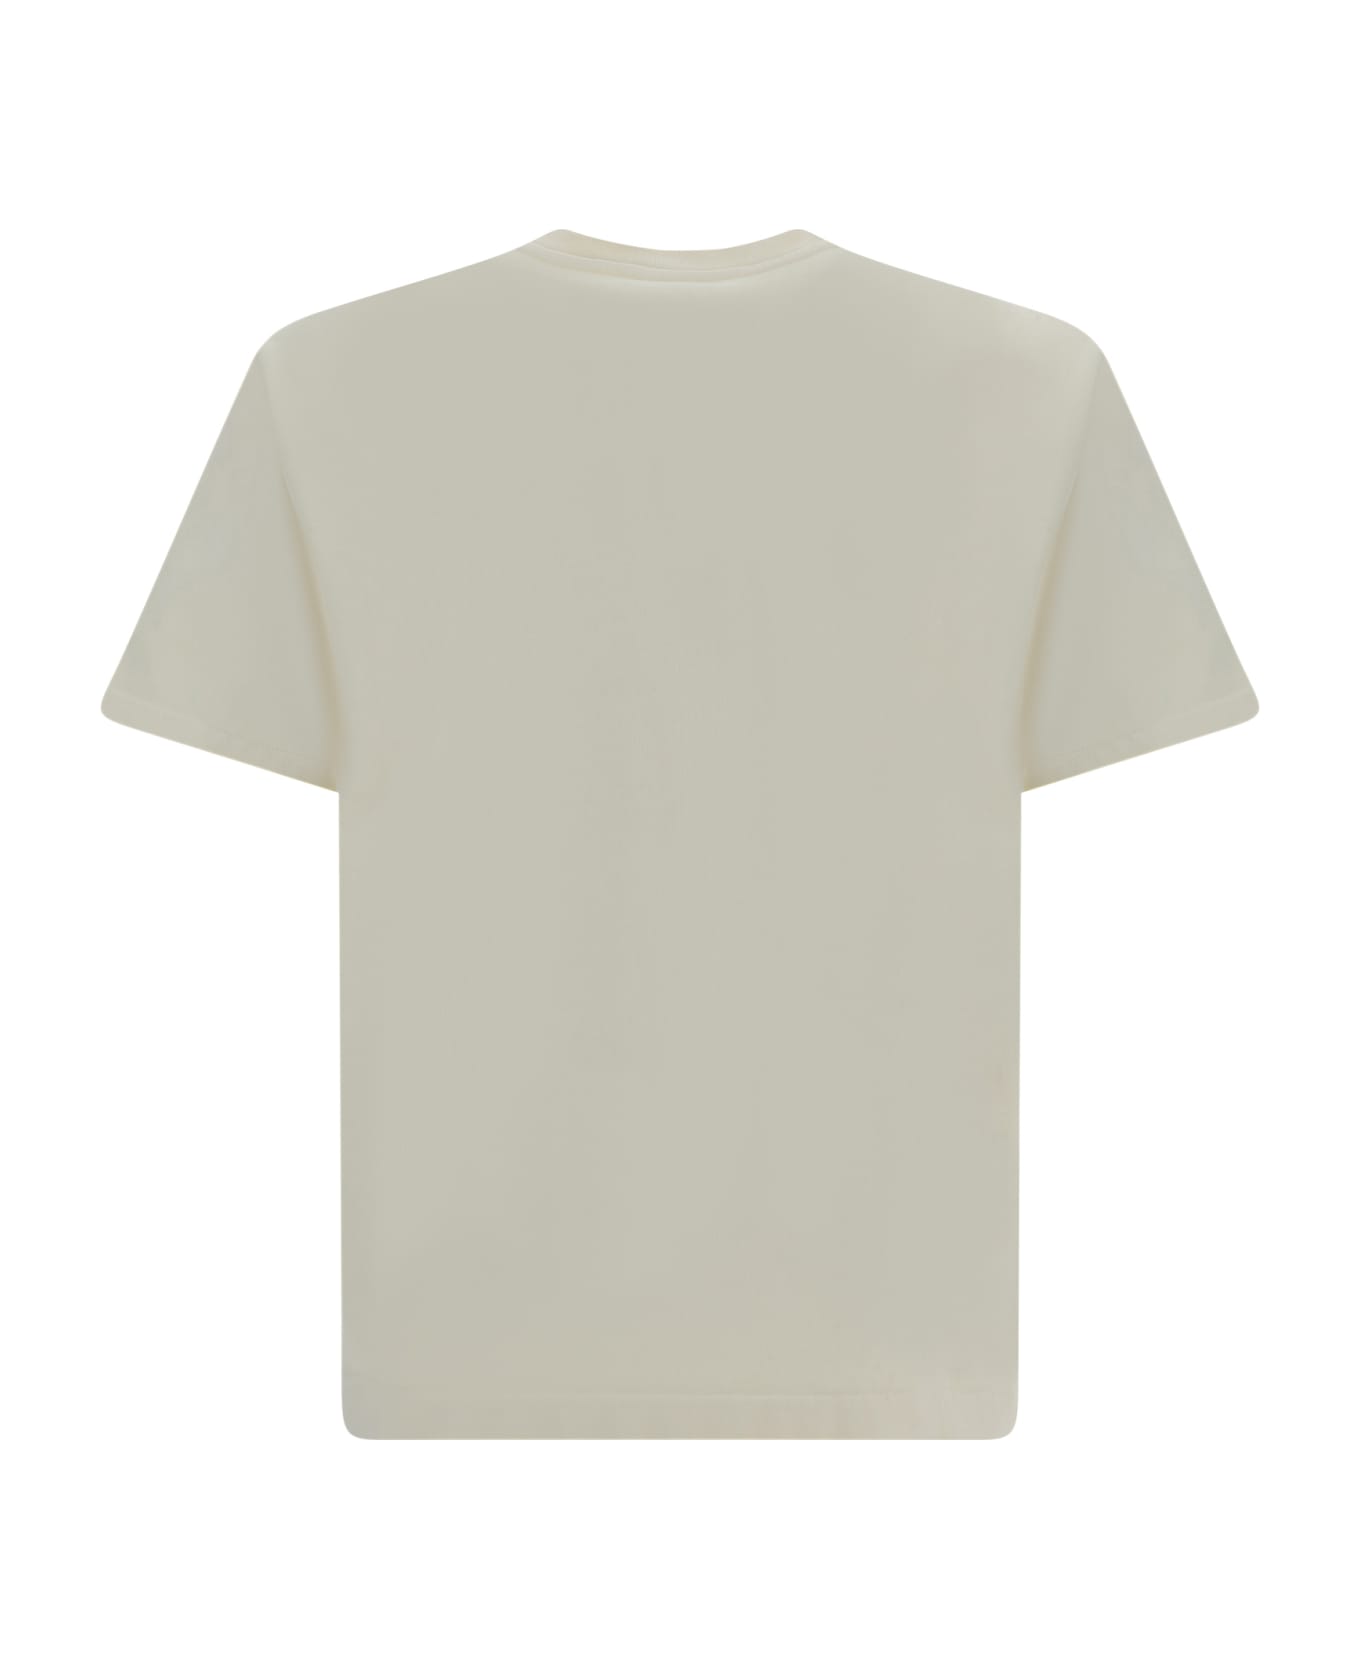 Autry T-shirt - Cream